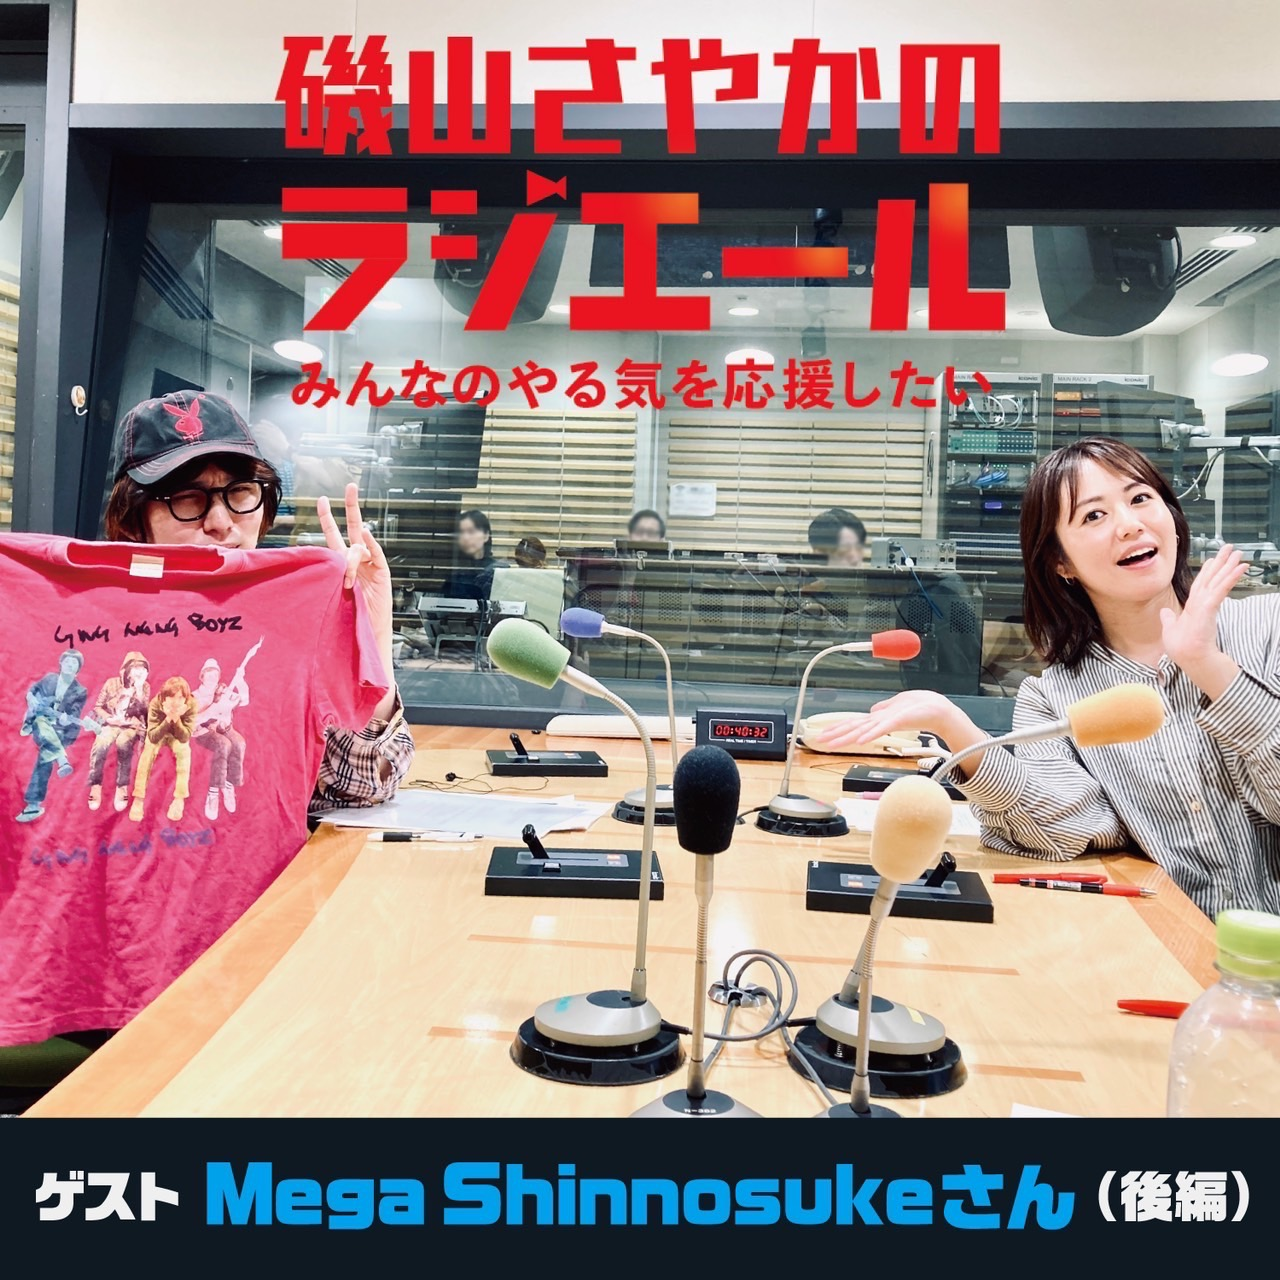 ep.4 “Mega Shinnosuke”さんが体現する"好きこそ物の上手なれ"